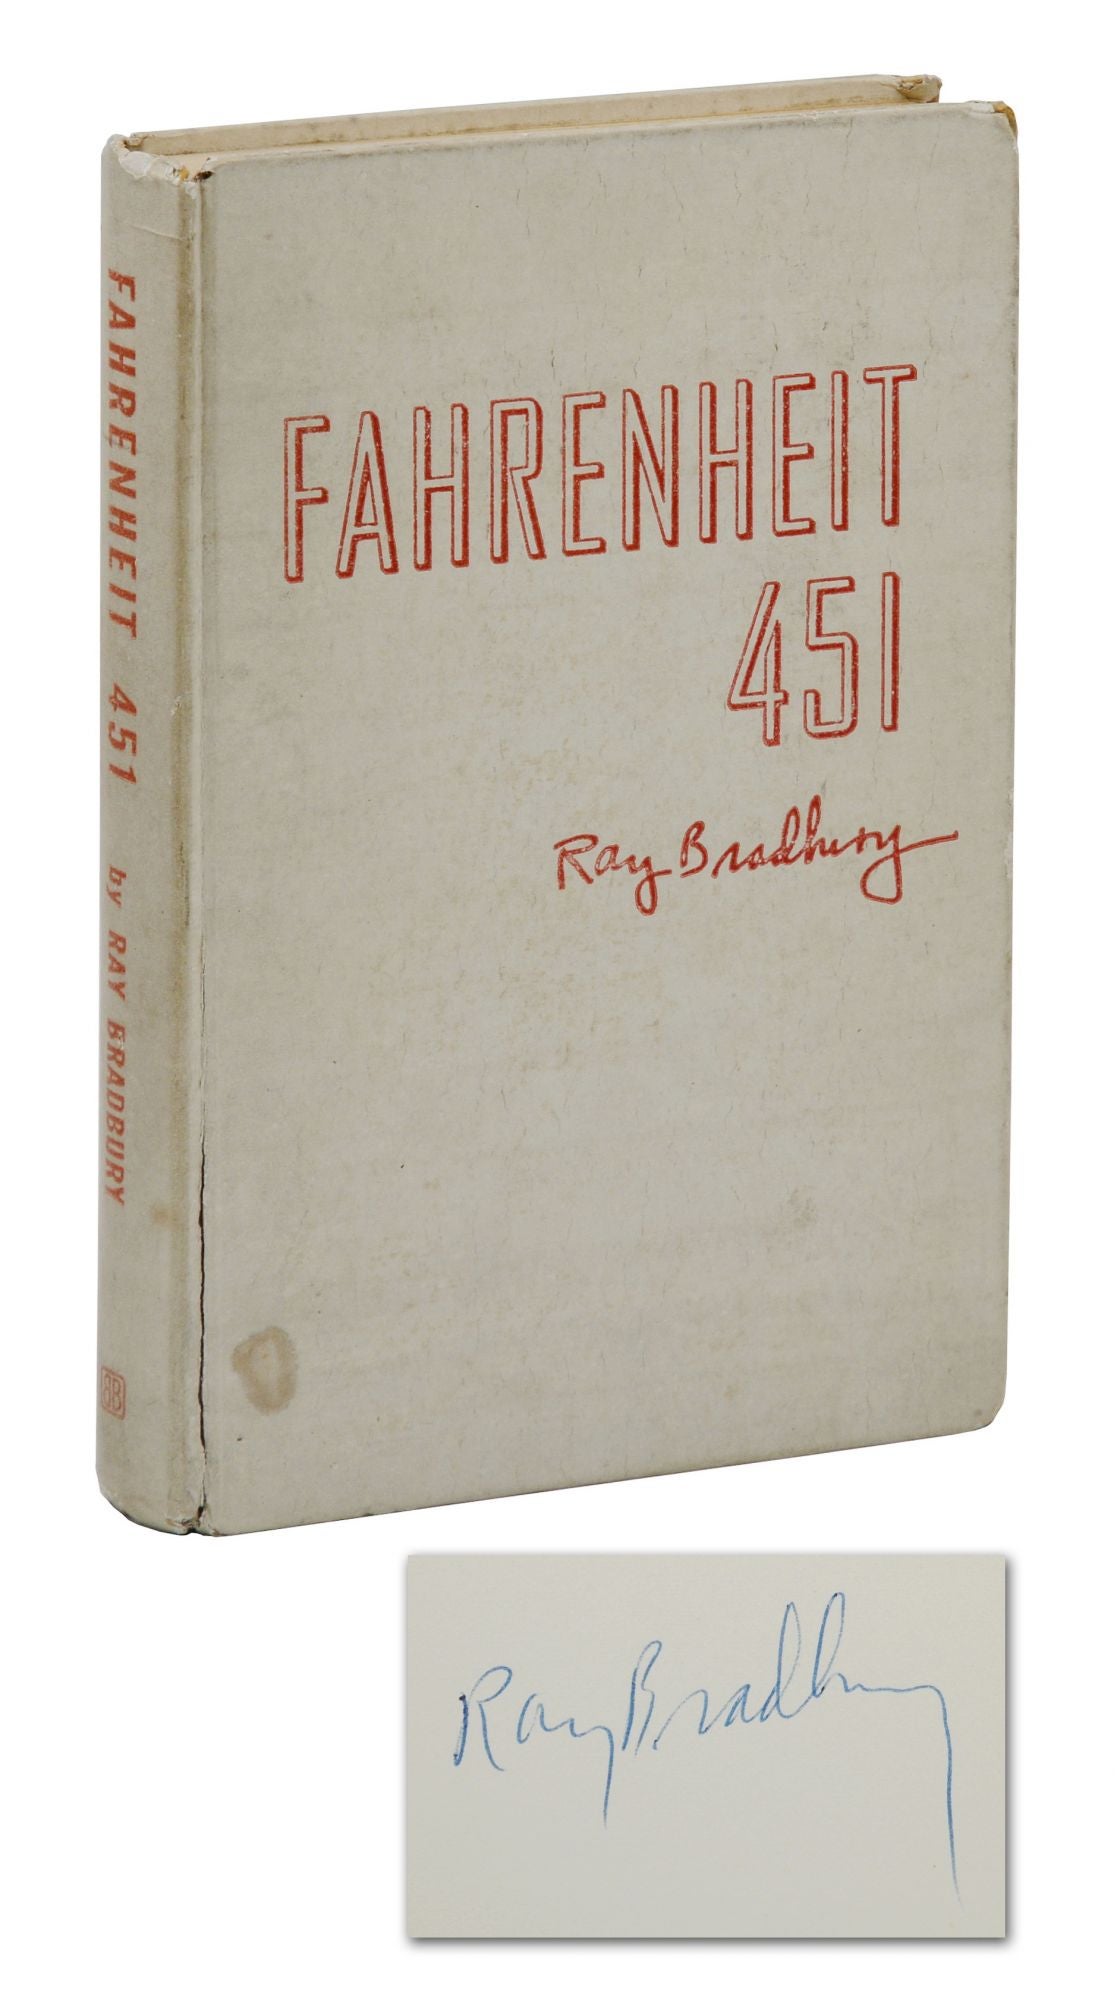 Fahrenheit 451, Ray Bradbury, Joe Mugnaini